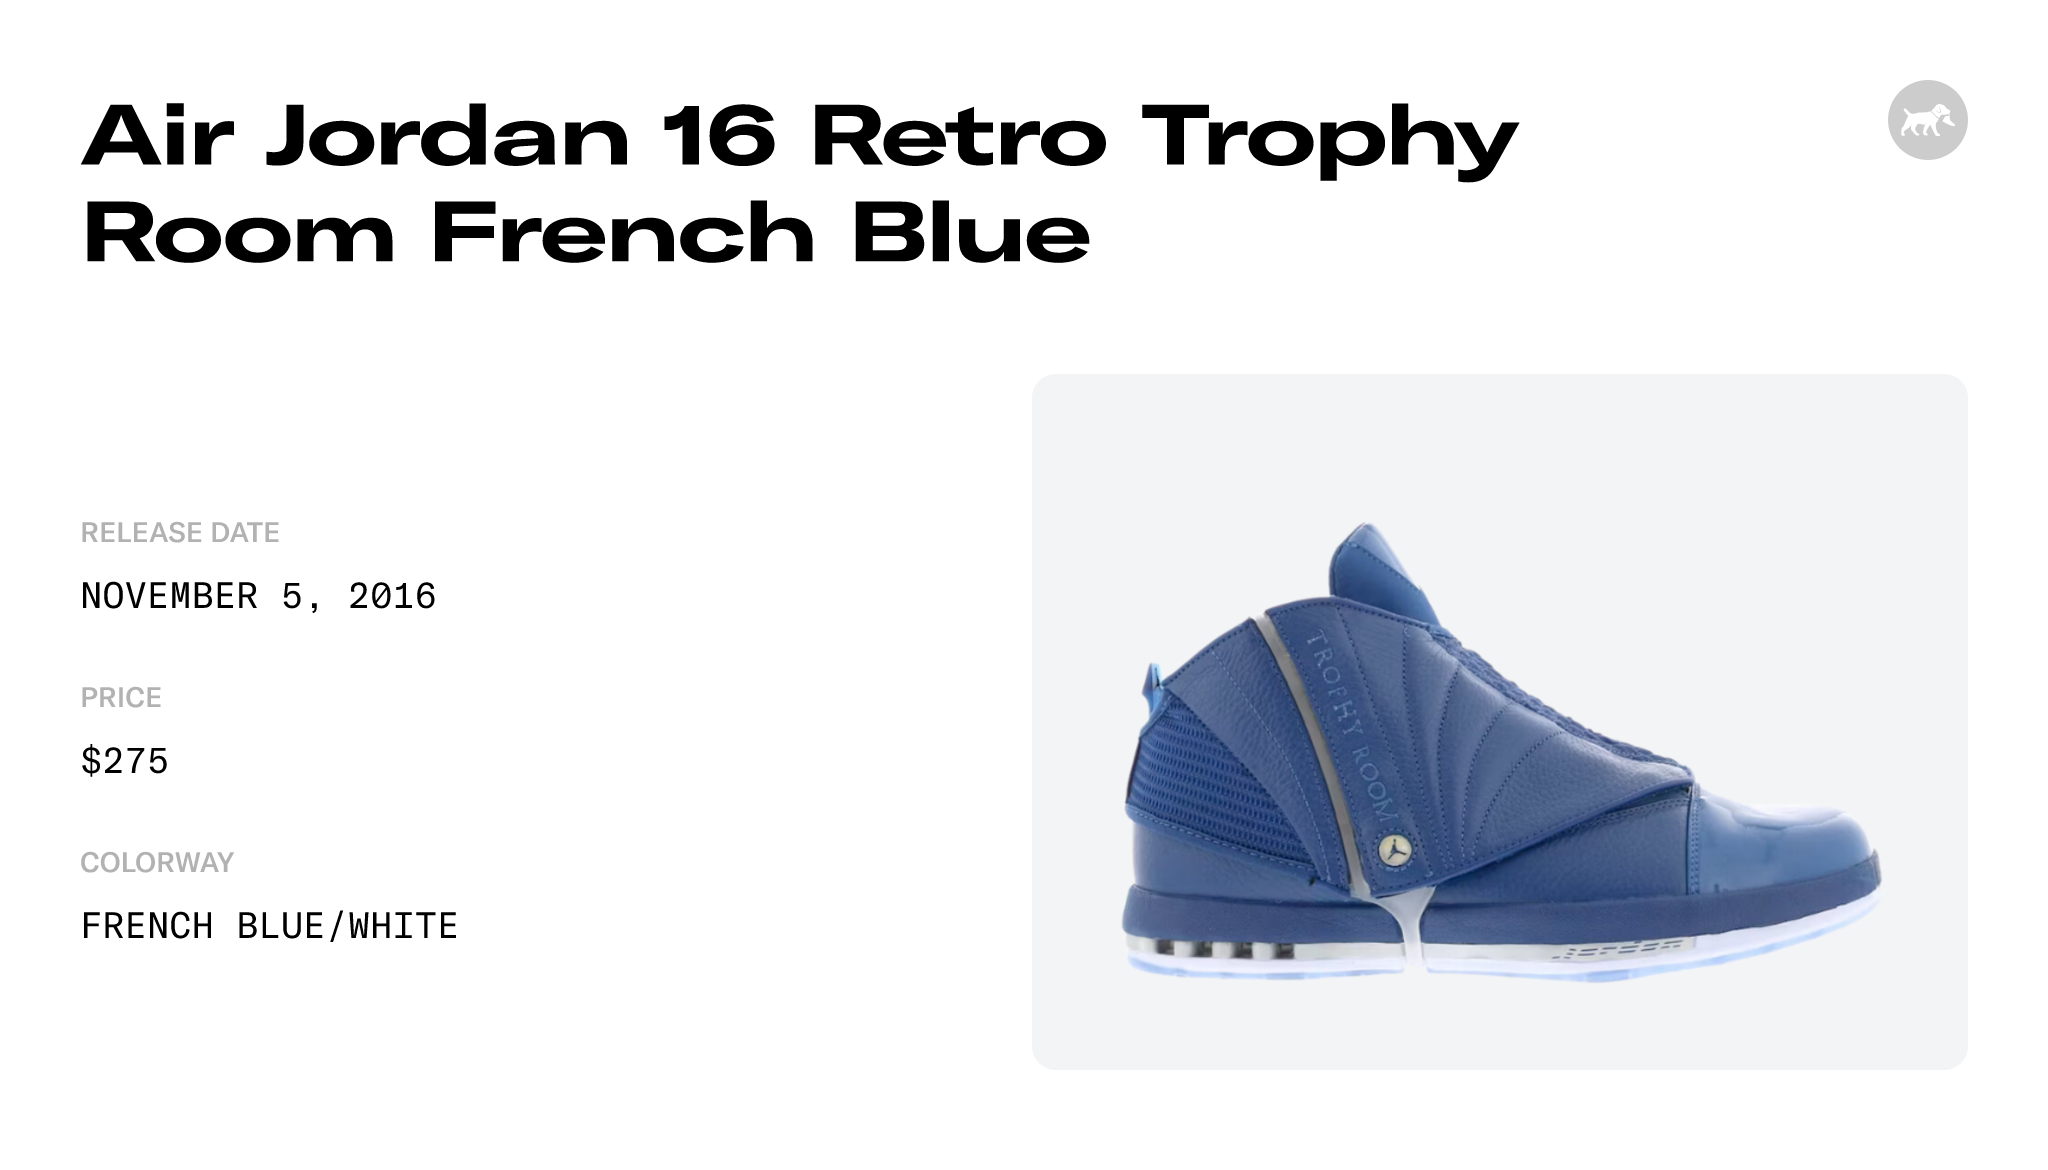 Air Jordan 16 Retro Trophy Room French Blue - 854255-416 Raffles